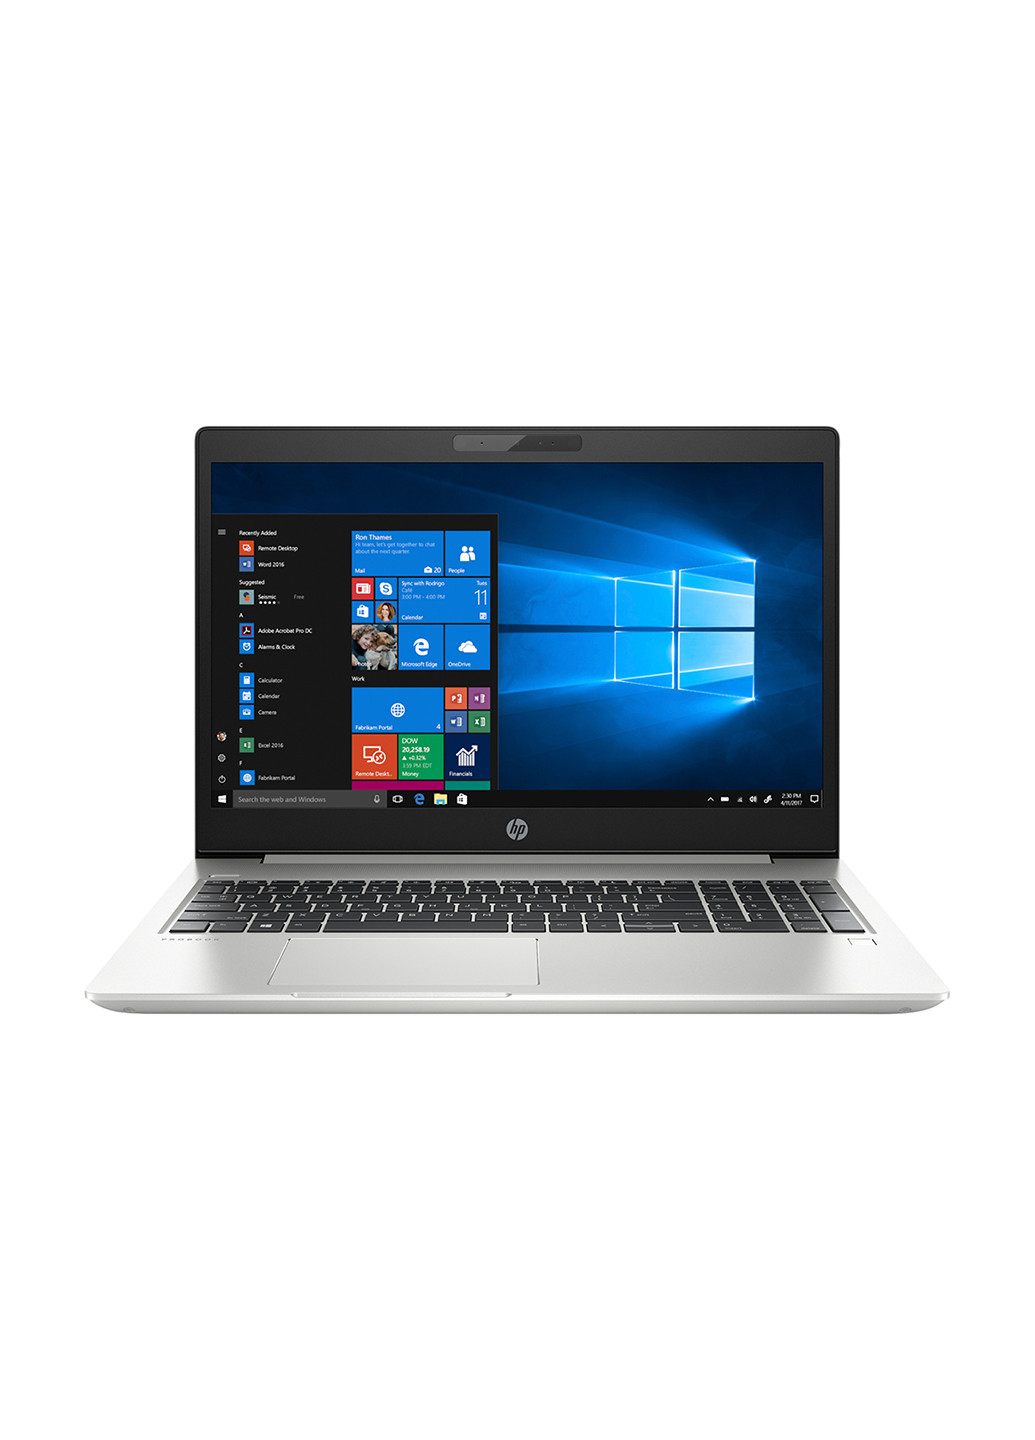 Ноутбук   HP probook 450 g6 (4sz47av_v10) silver (138209551)